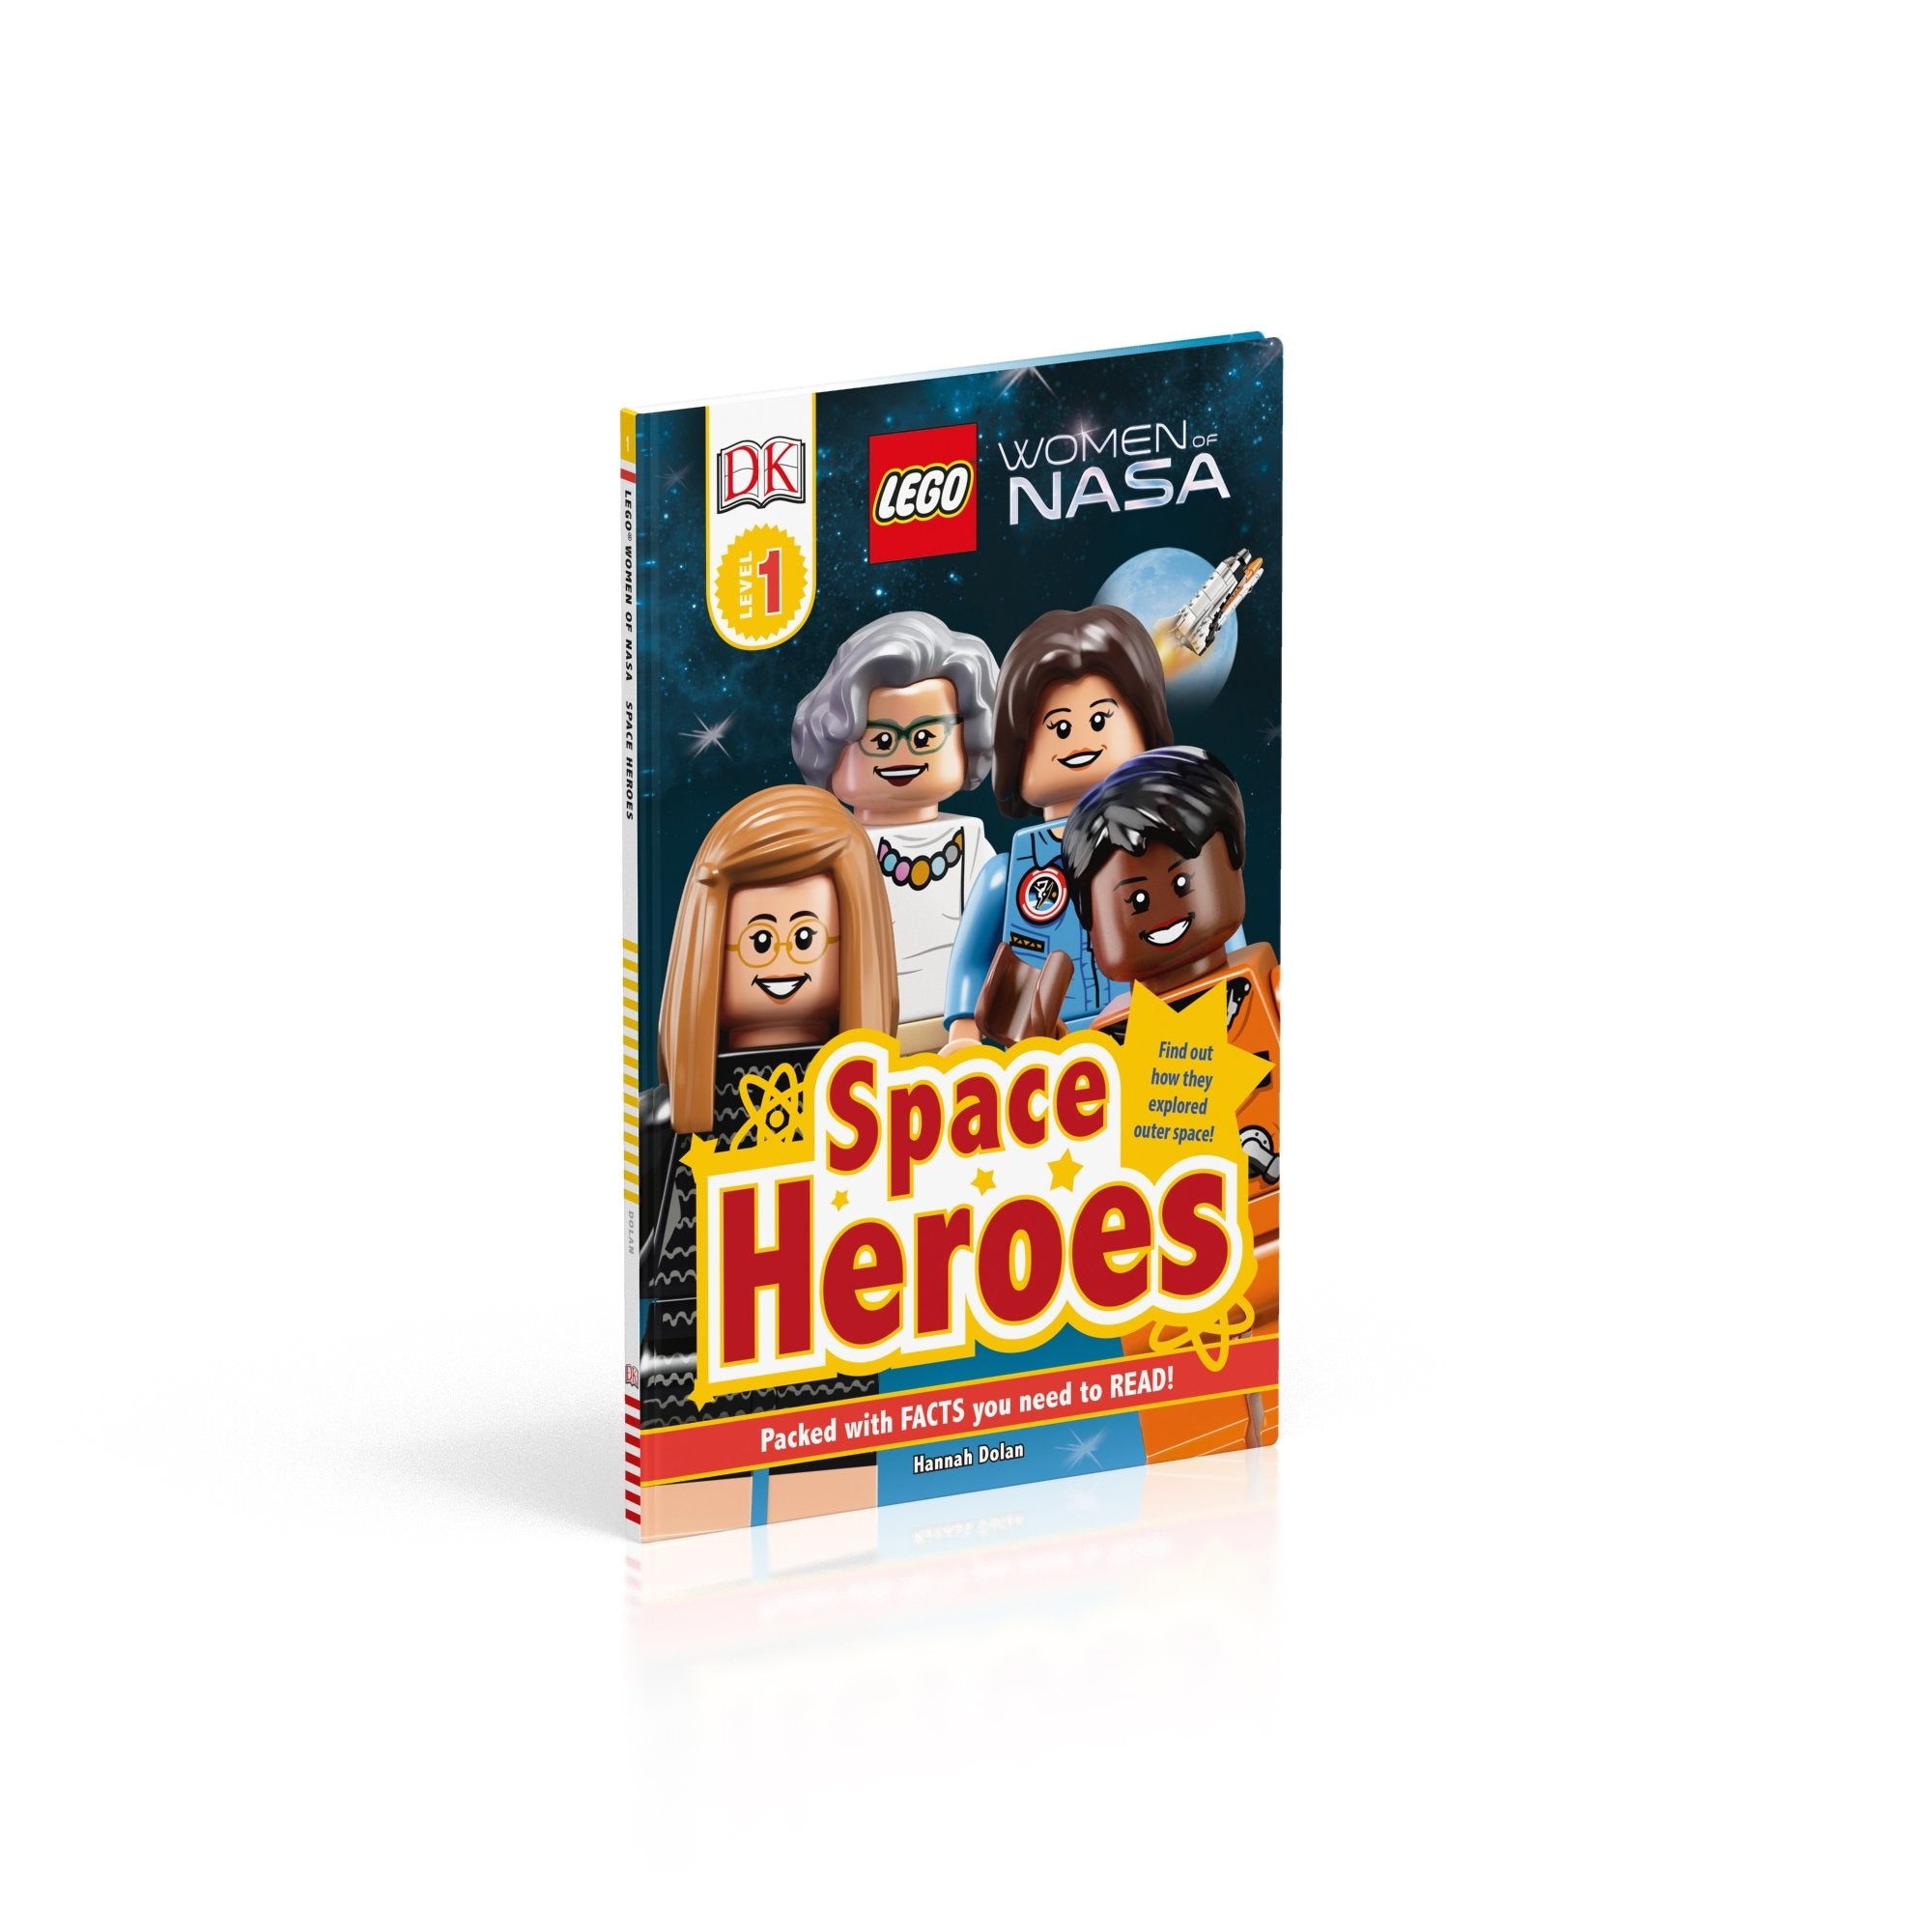 LEGO Women of NASA Space Heroes (DK Readers Level 1)